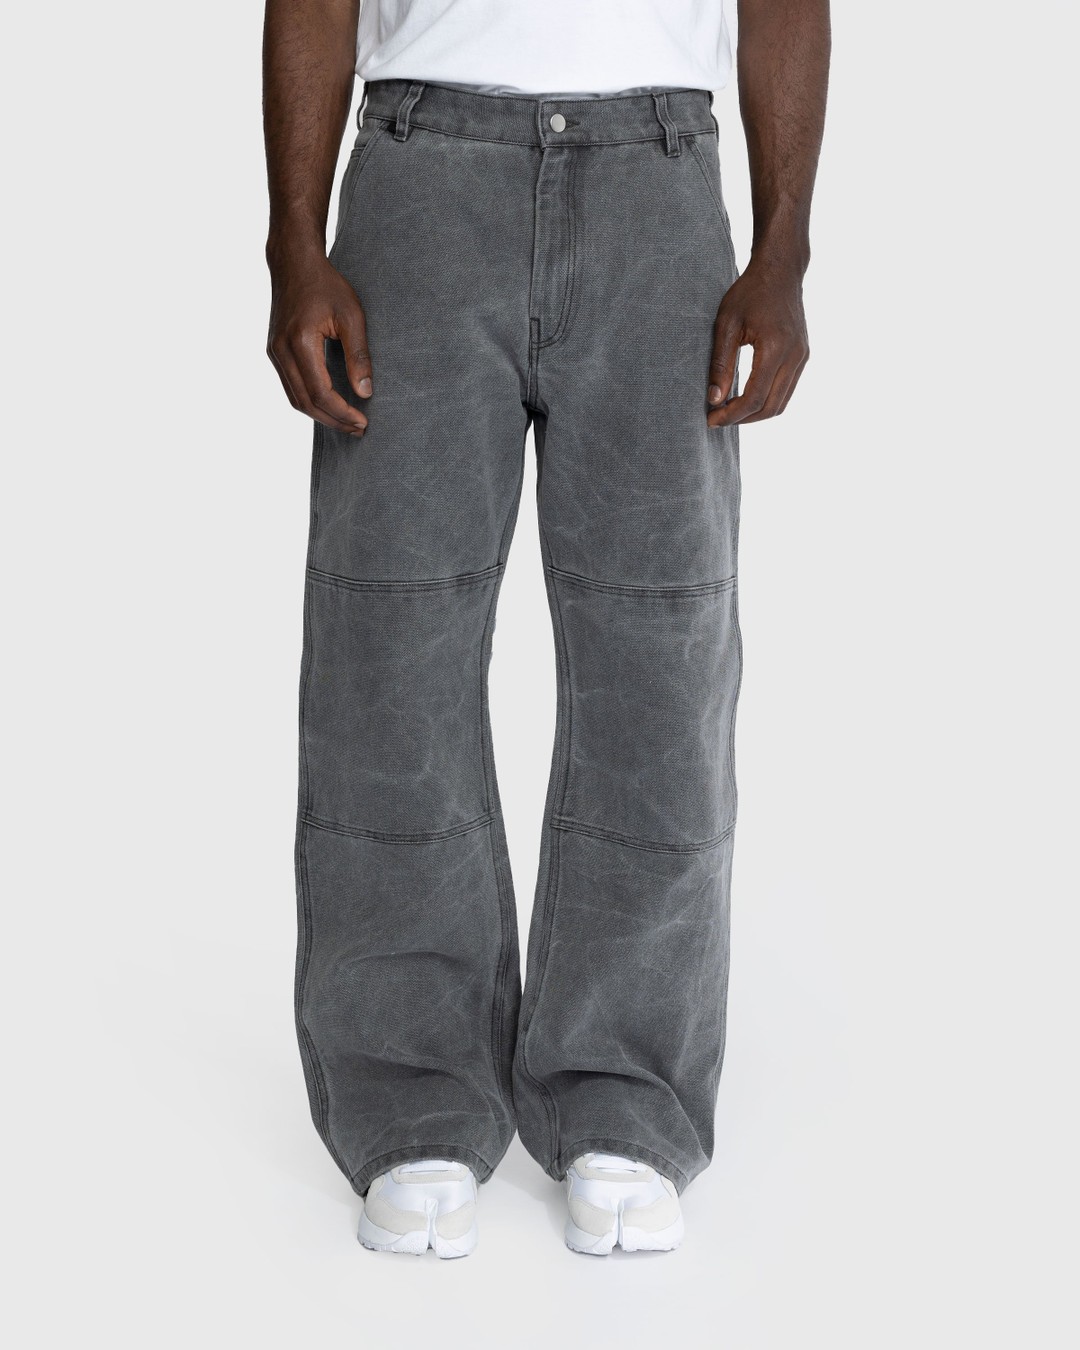 Acne Studios – Cotton Canvas Trousers Grey - Pants - Grey - Image 2